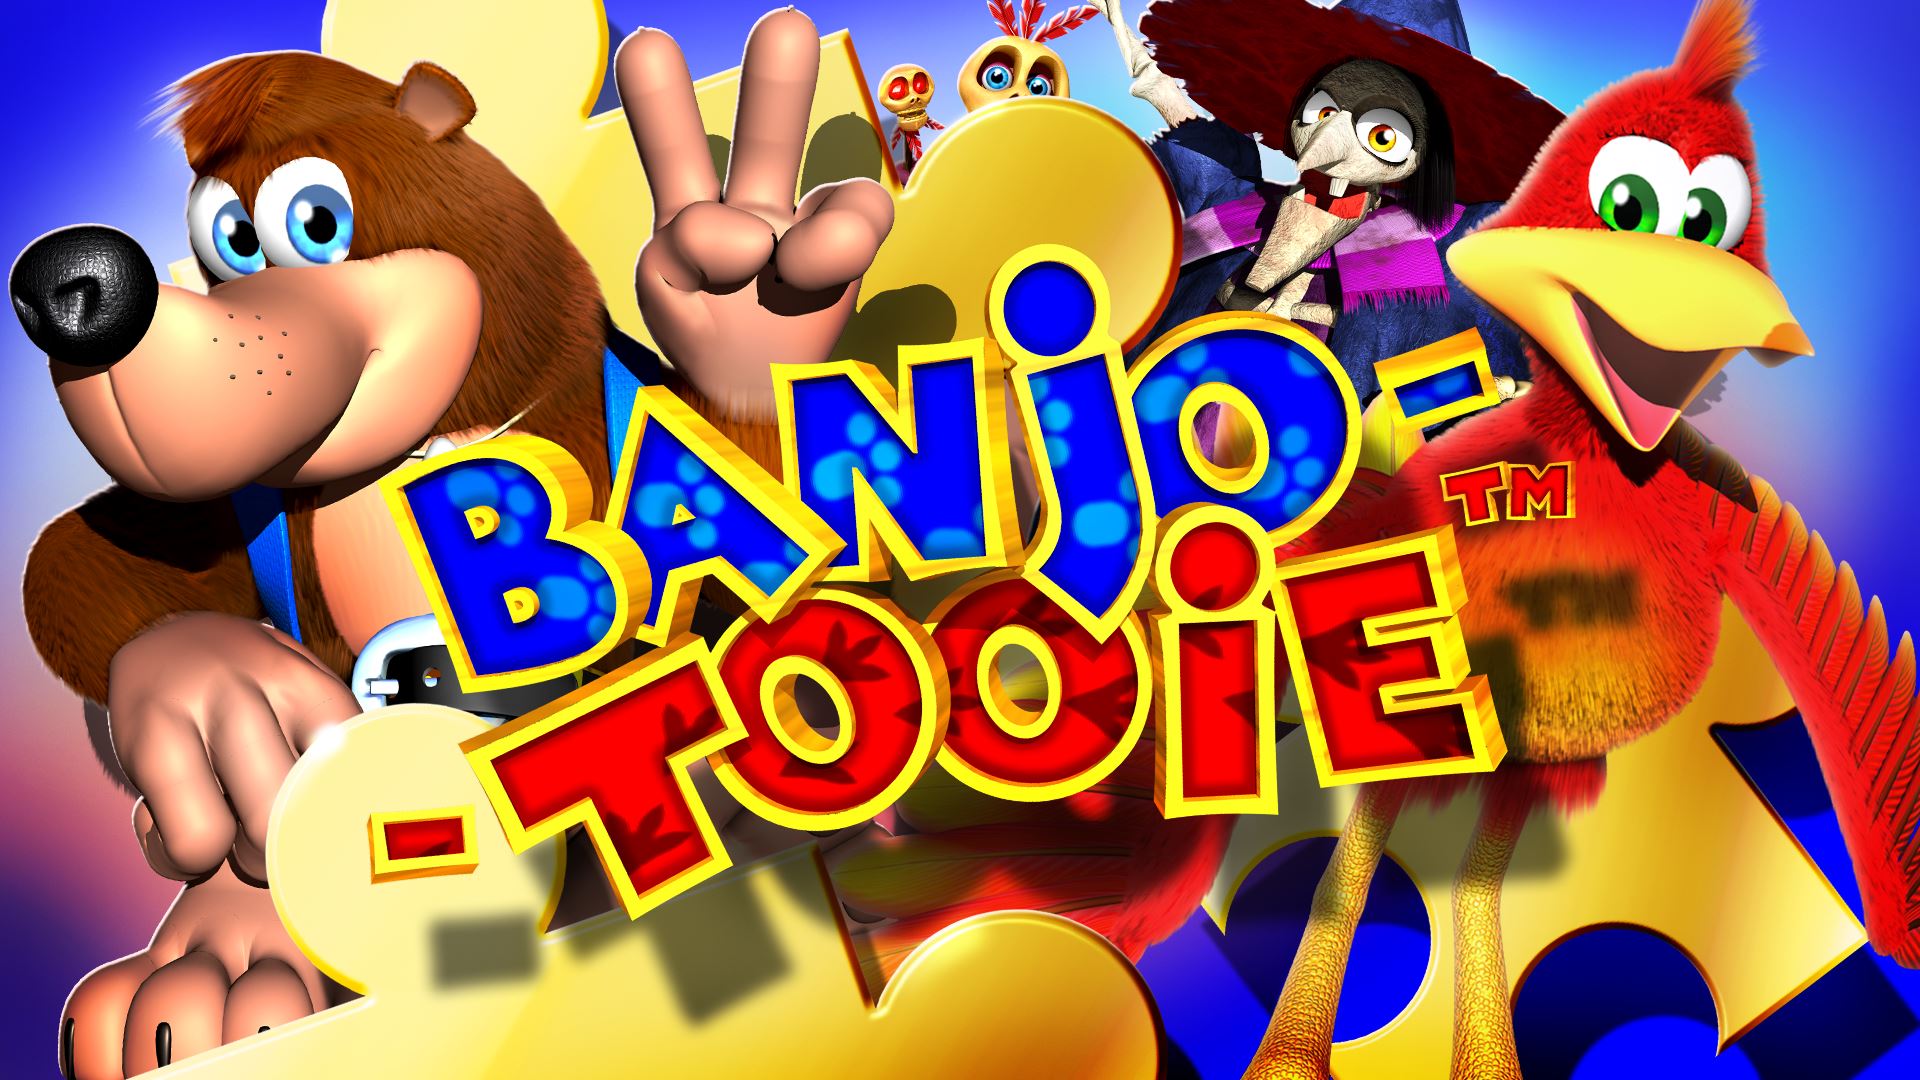 Banjo-Tooie HD Wallpaper